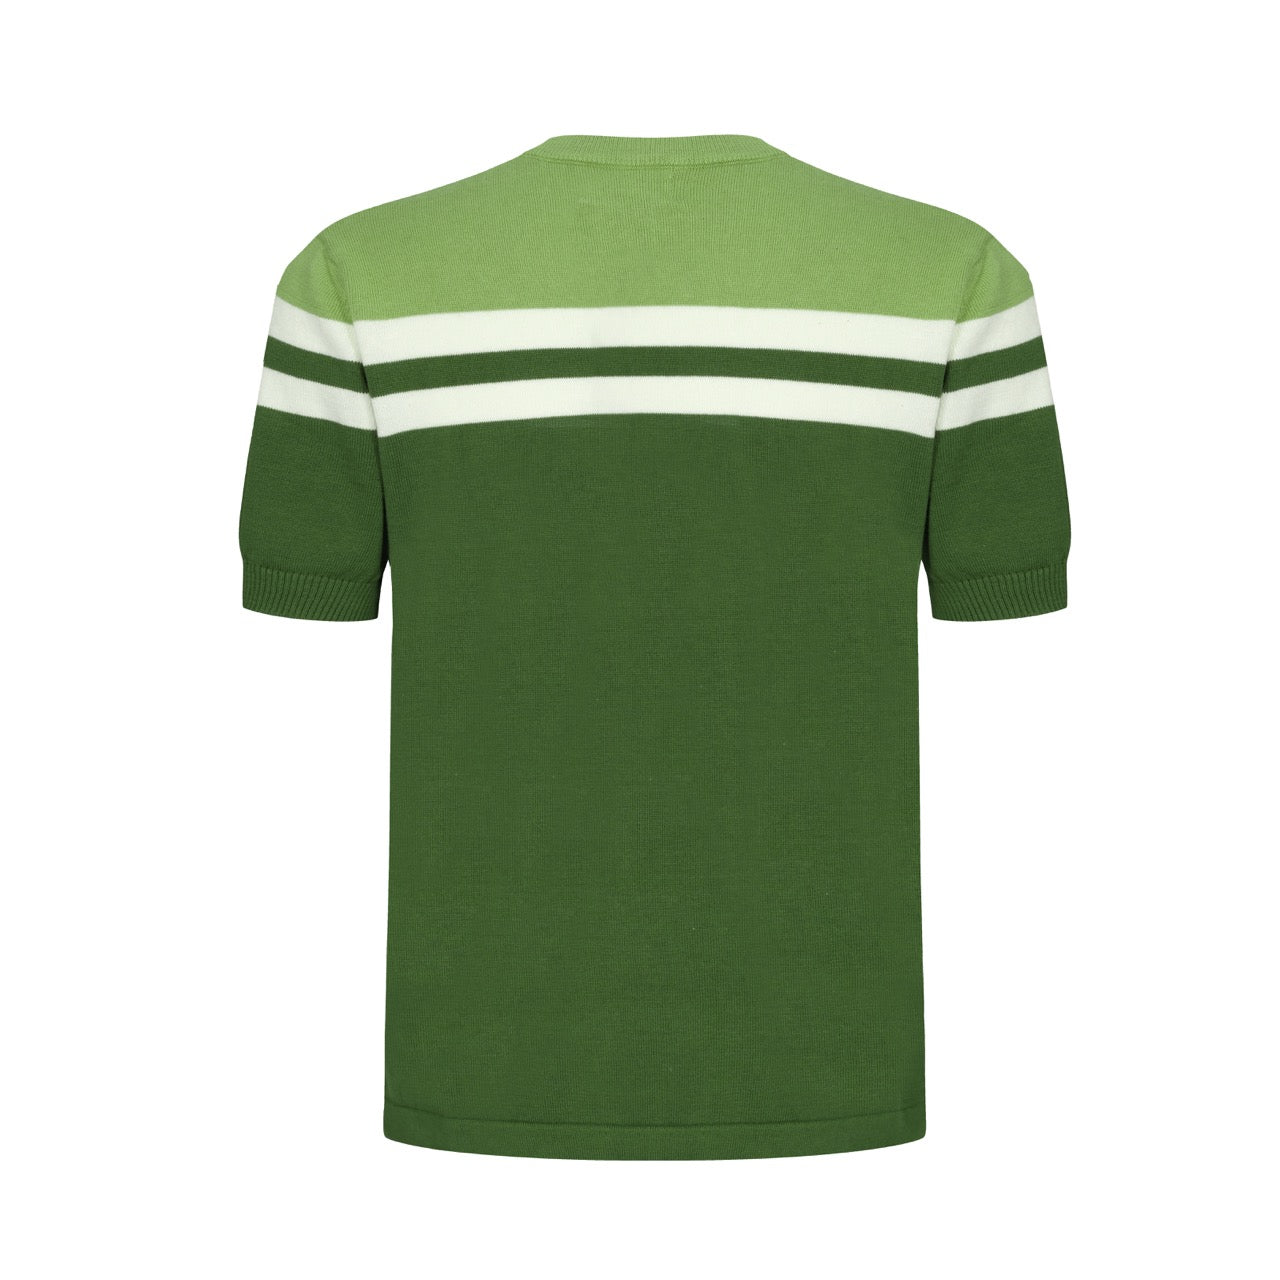 OXKNIT Men Vintage Clothing 1960s Mod Style Casual Short Sleeve Green Knitwear Retro Tshirt